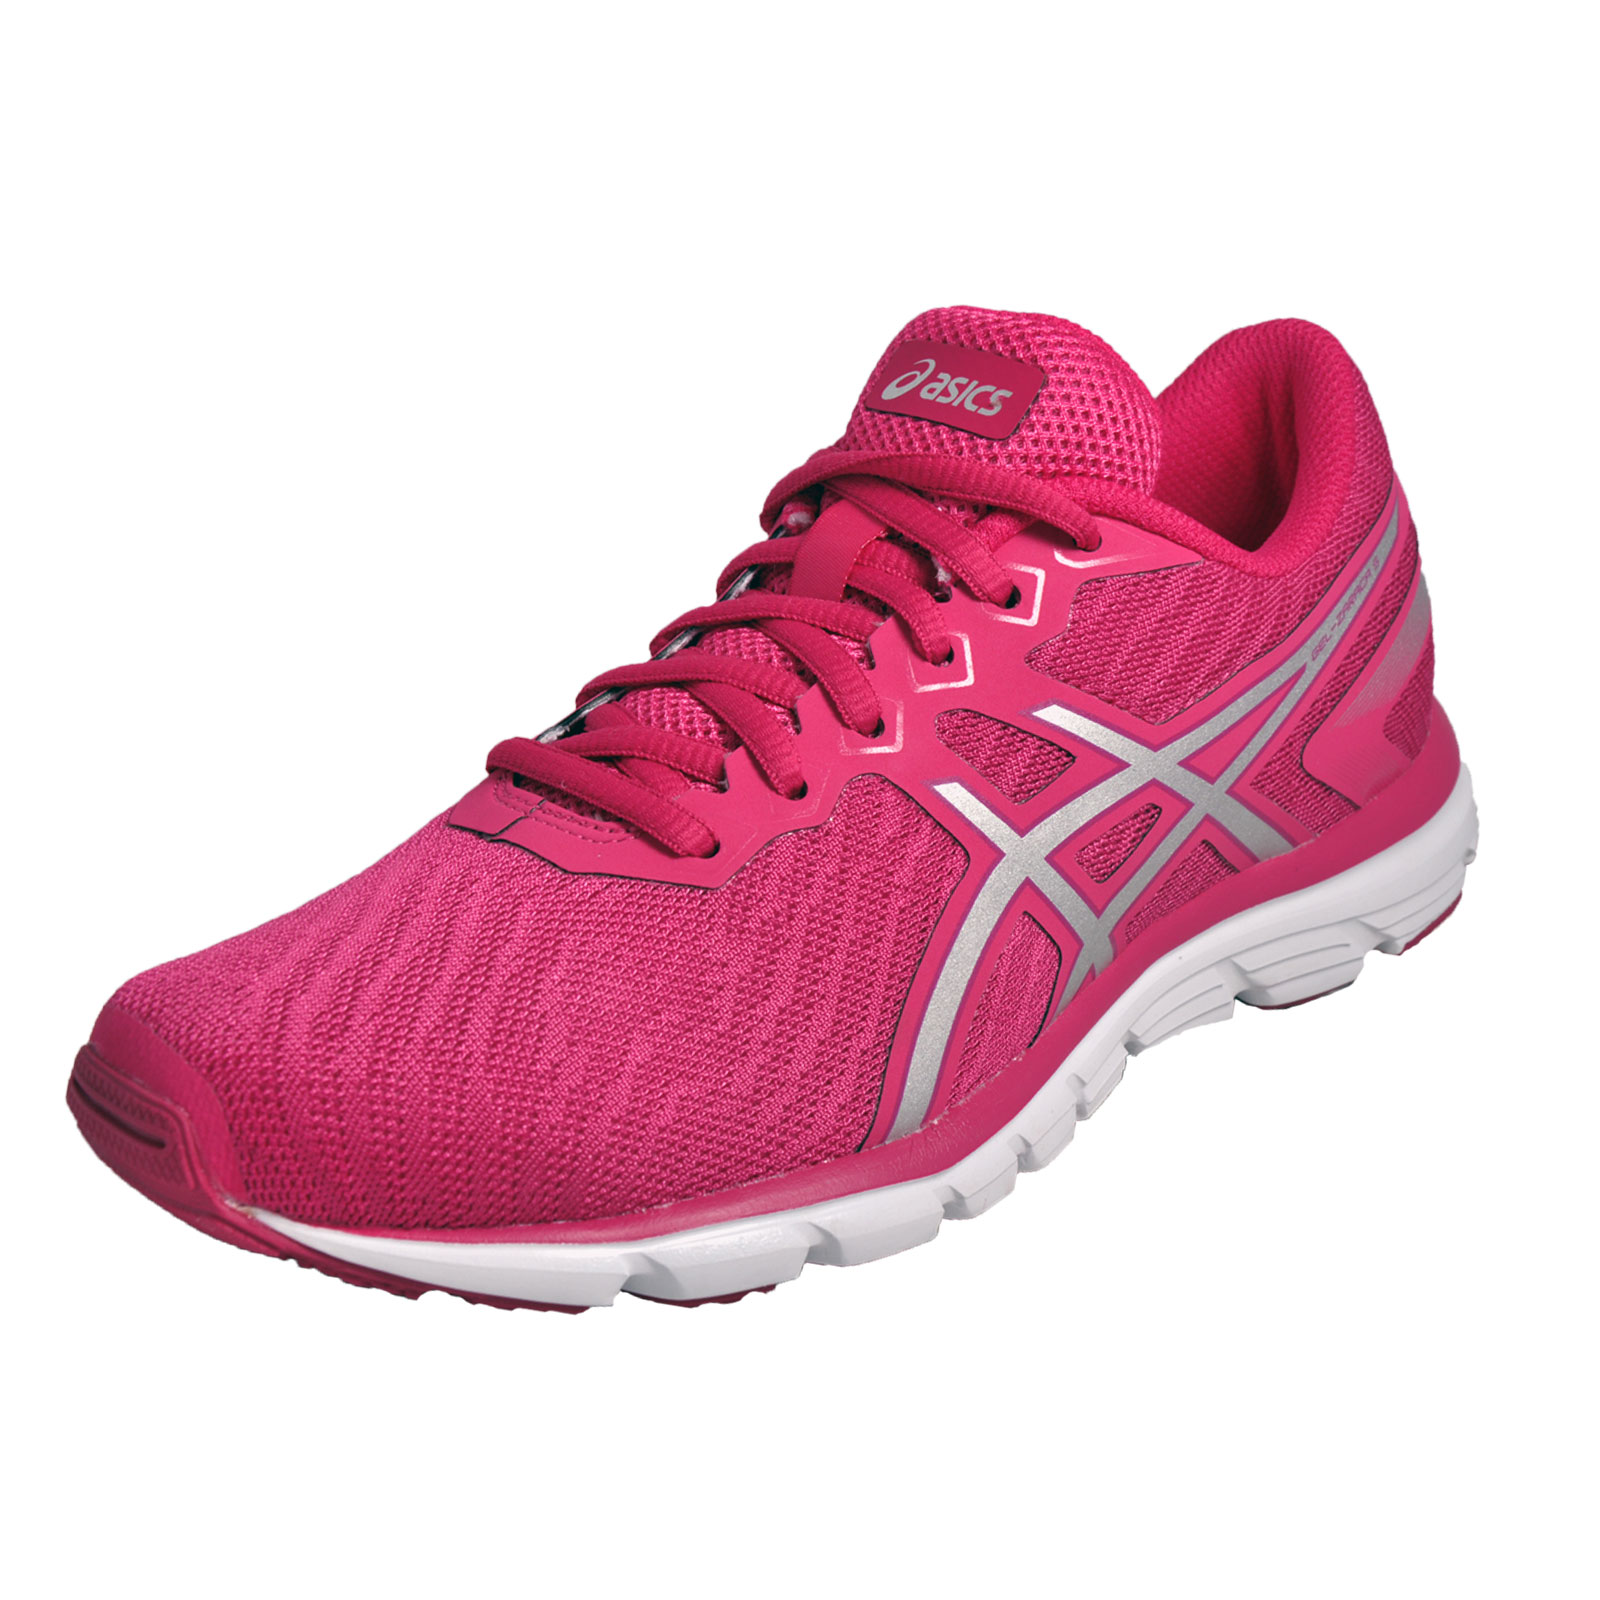 Asics Gel-Zaraca 5 Womens Running Shoes Fitness Gym Trainers Pink | eBay